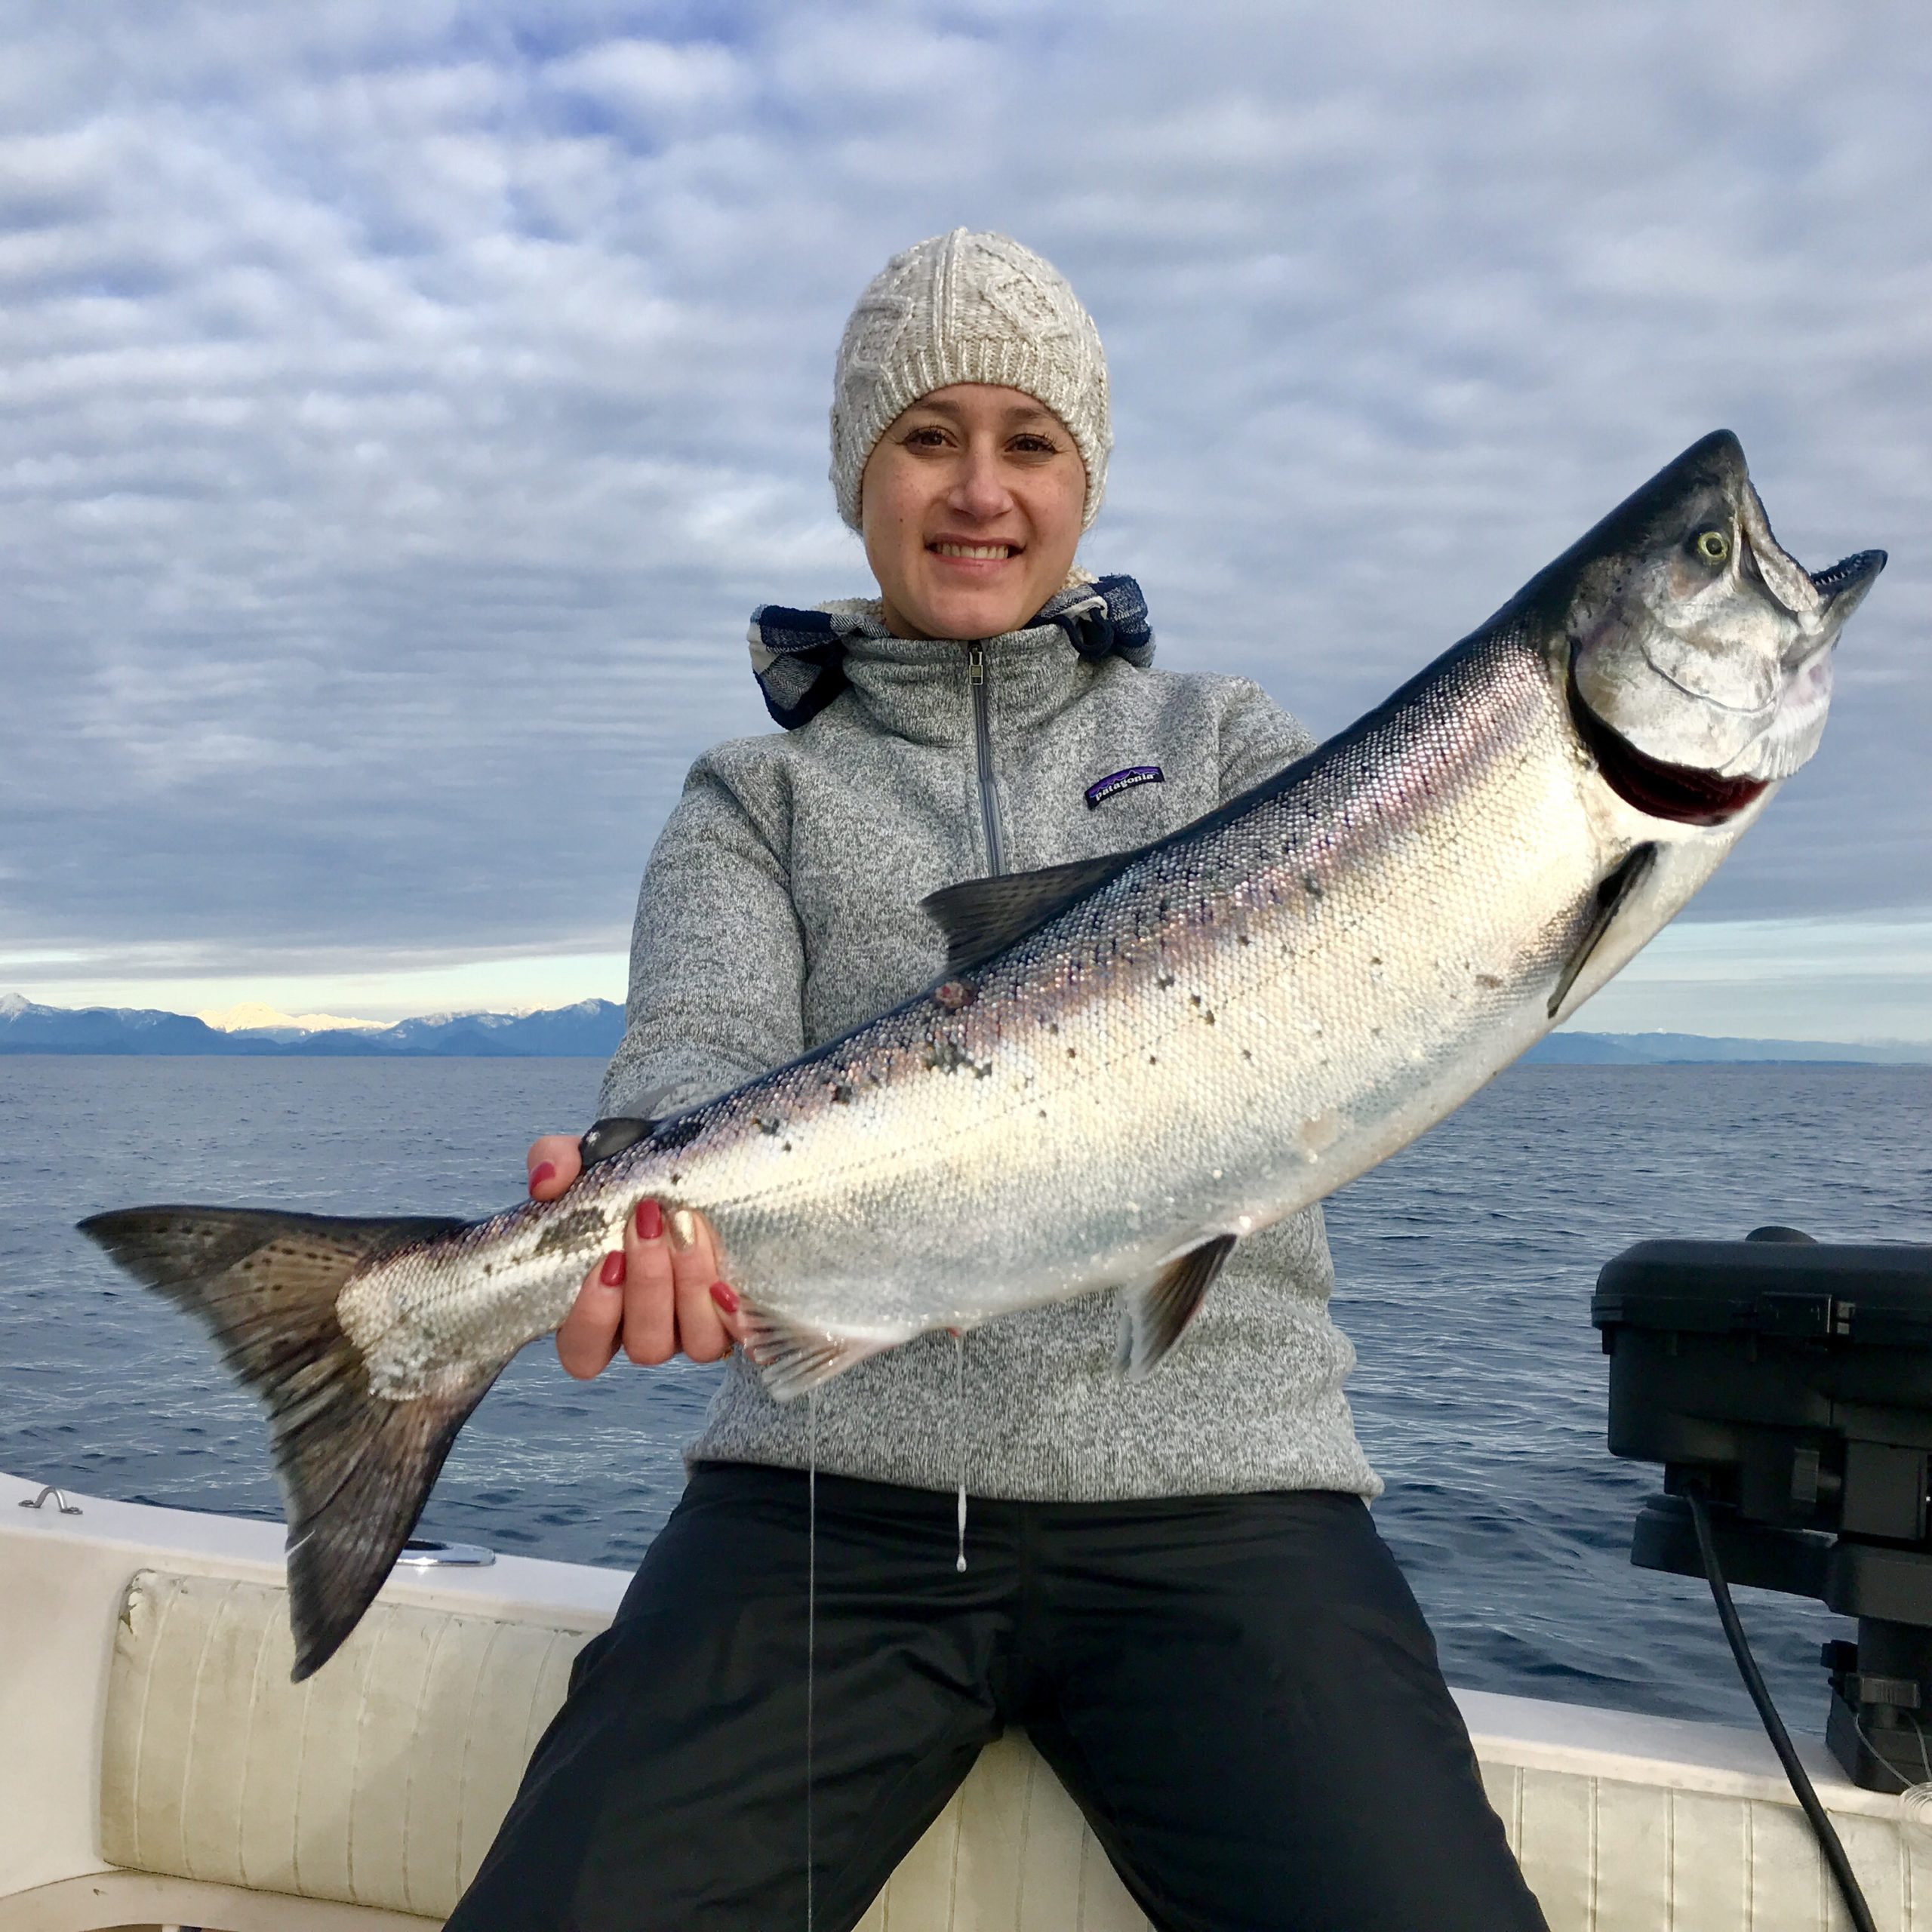 Vancouver Salmon Fishing Report: January 1, 2021 - Vancouver Salmon Fishing